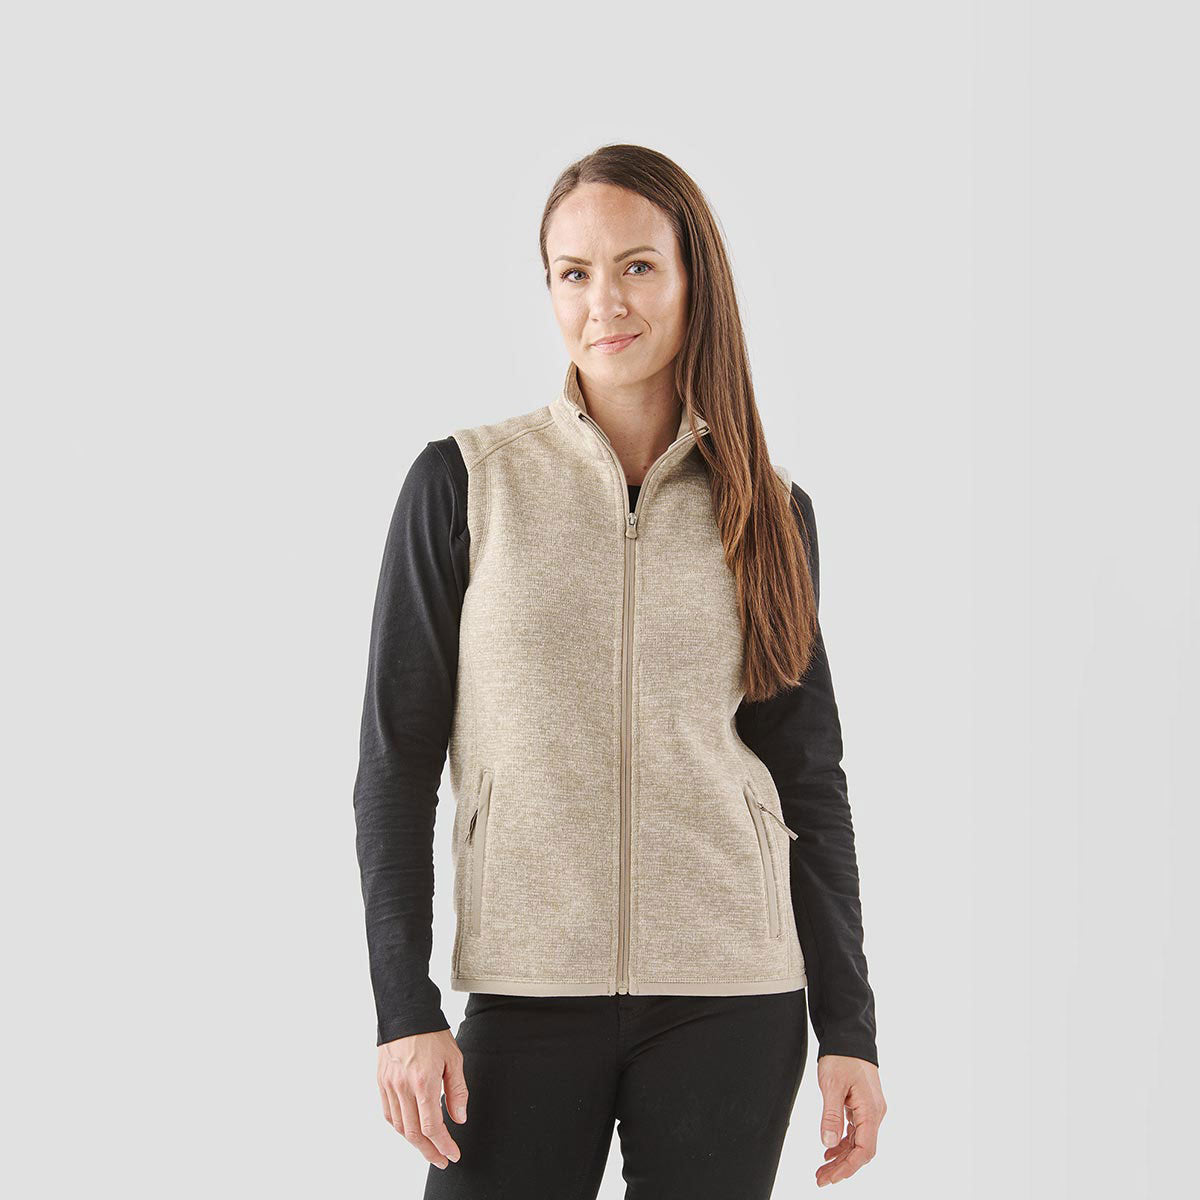 Women's Avalante Full Zip Fleece Vest - Stormtech USA Retail